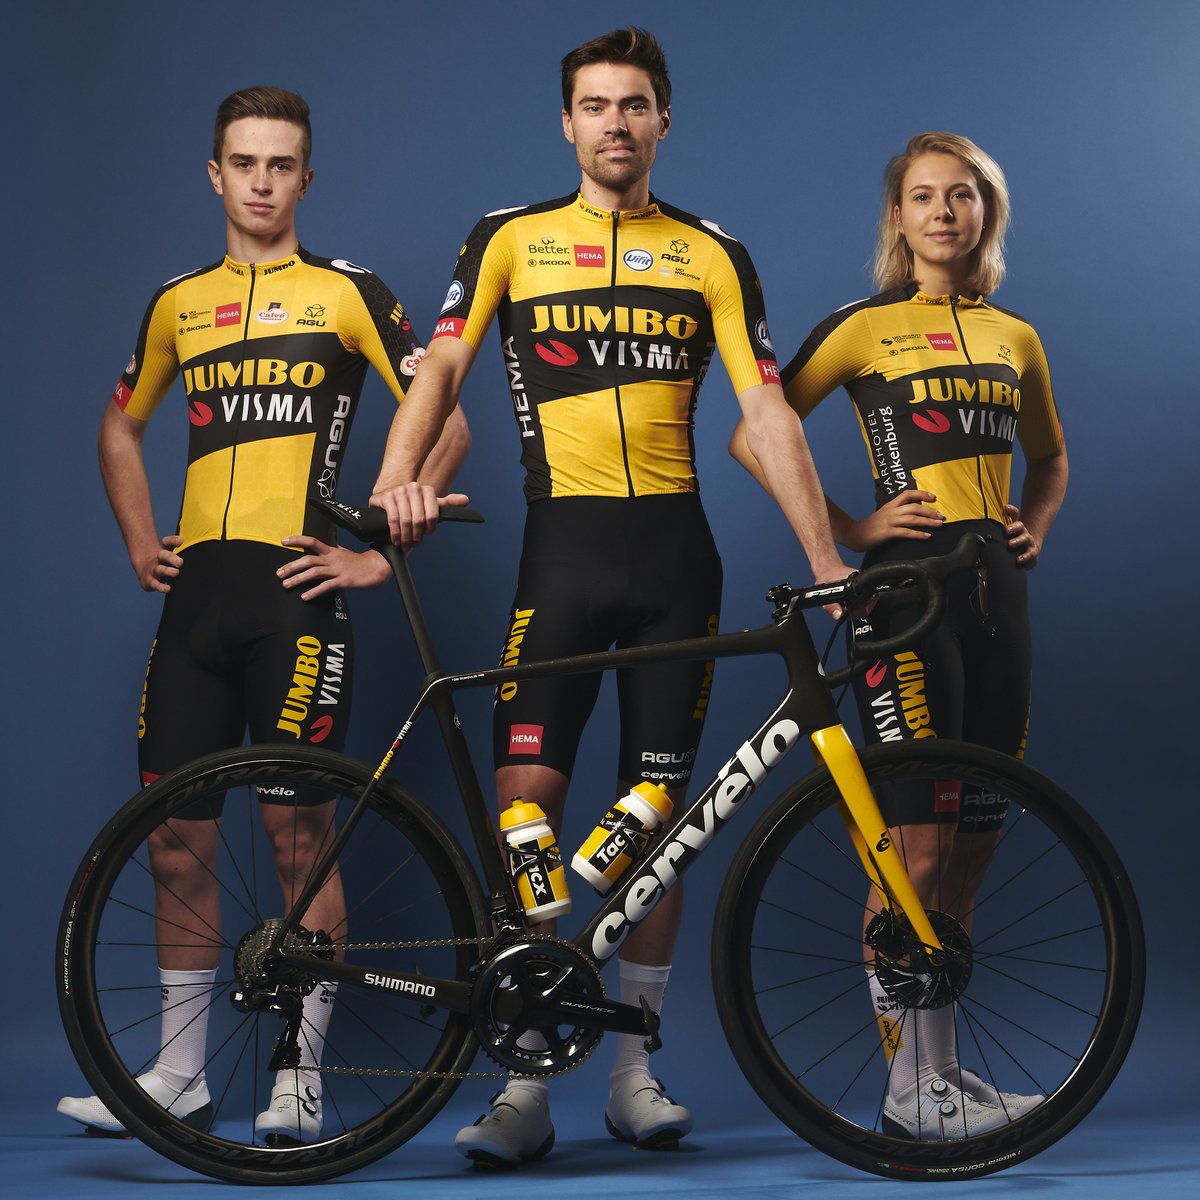 Vegen Nuttig Commissie Team Jumbo-Visma cycling 在 Twitter 上："Our team ➡ #ourblackandyellow🤩  https://t.co/wdl6KVFZrx" / Twitter